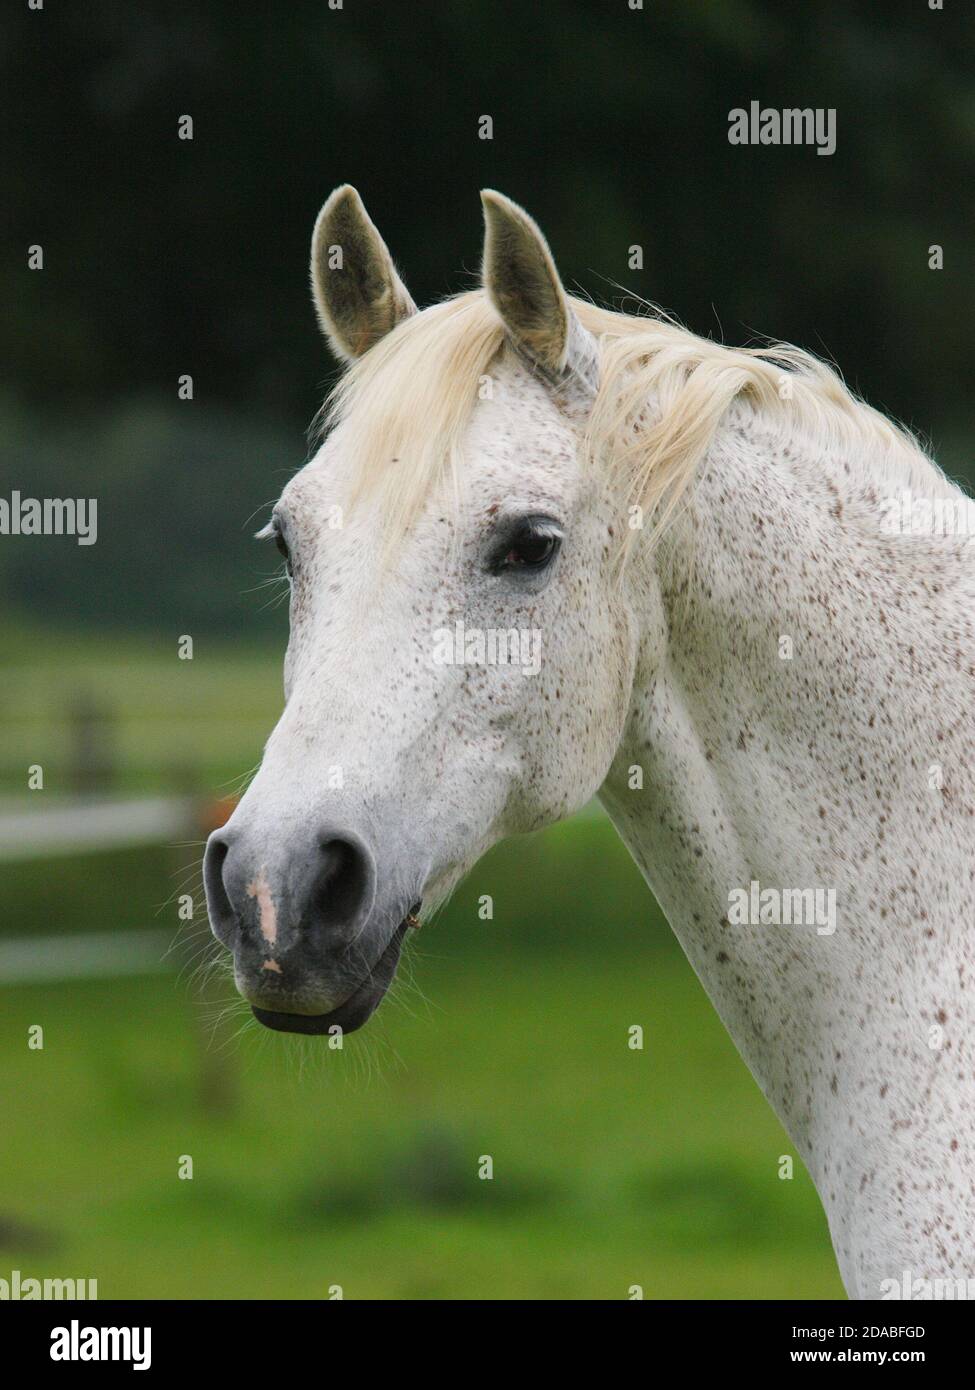 A head shot of a dappled grey arab horse in a paddock. Stock Photo